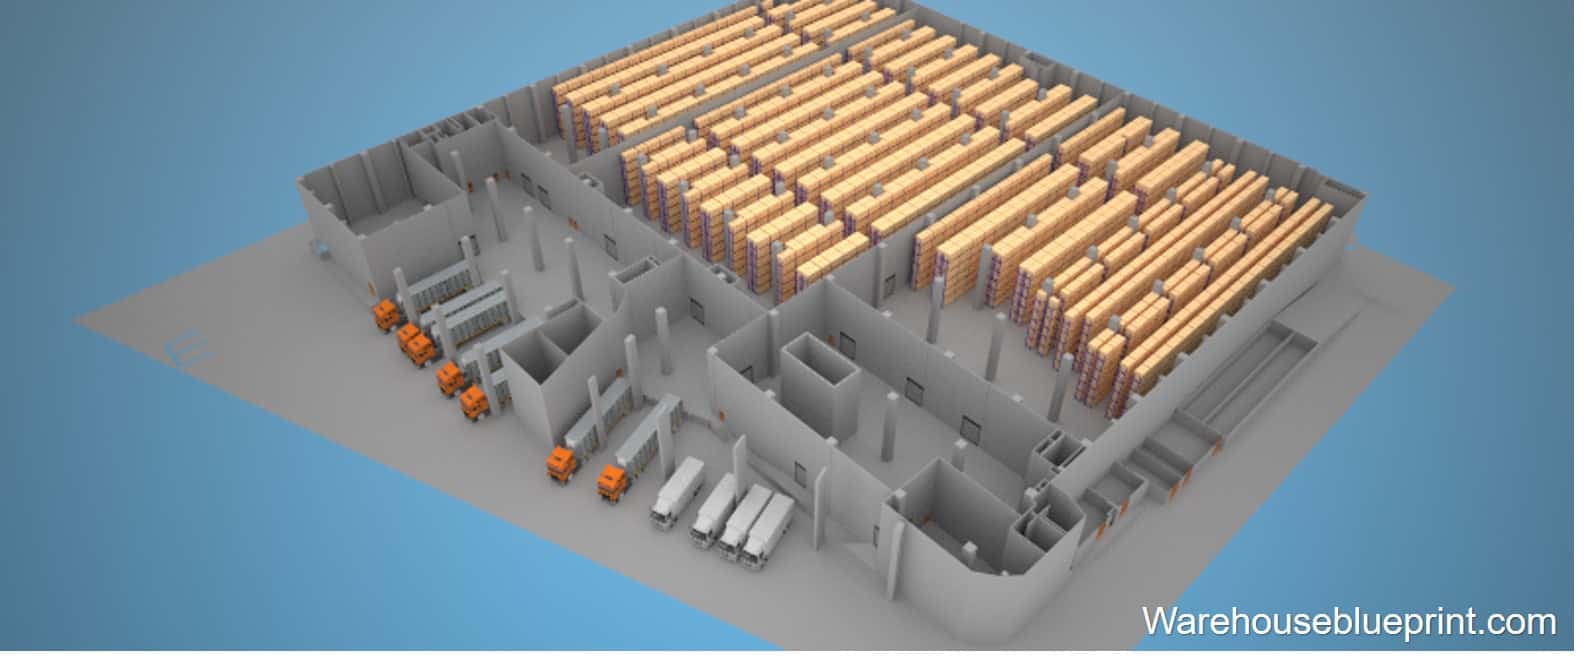 An example of WarehouseBlueprint’s 3D design capabilities